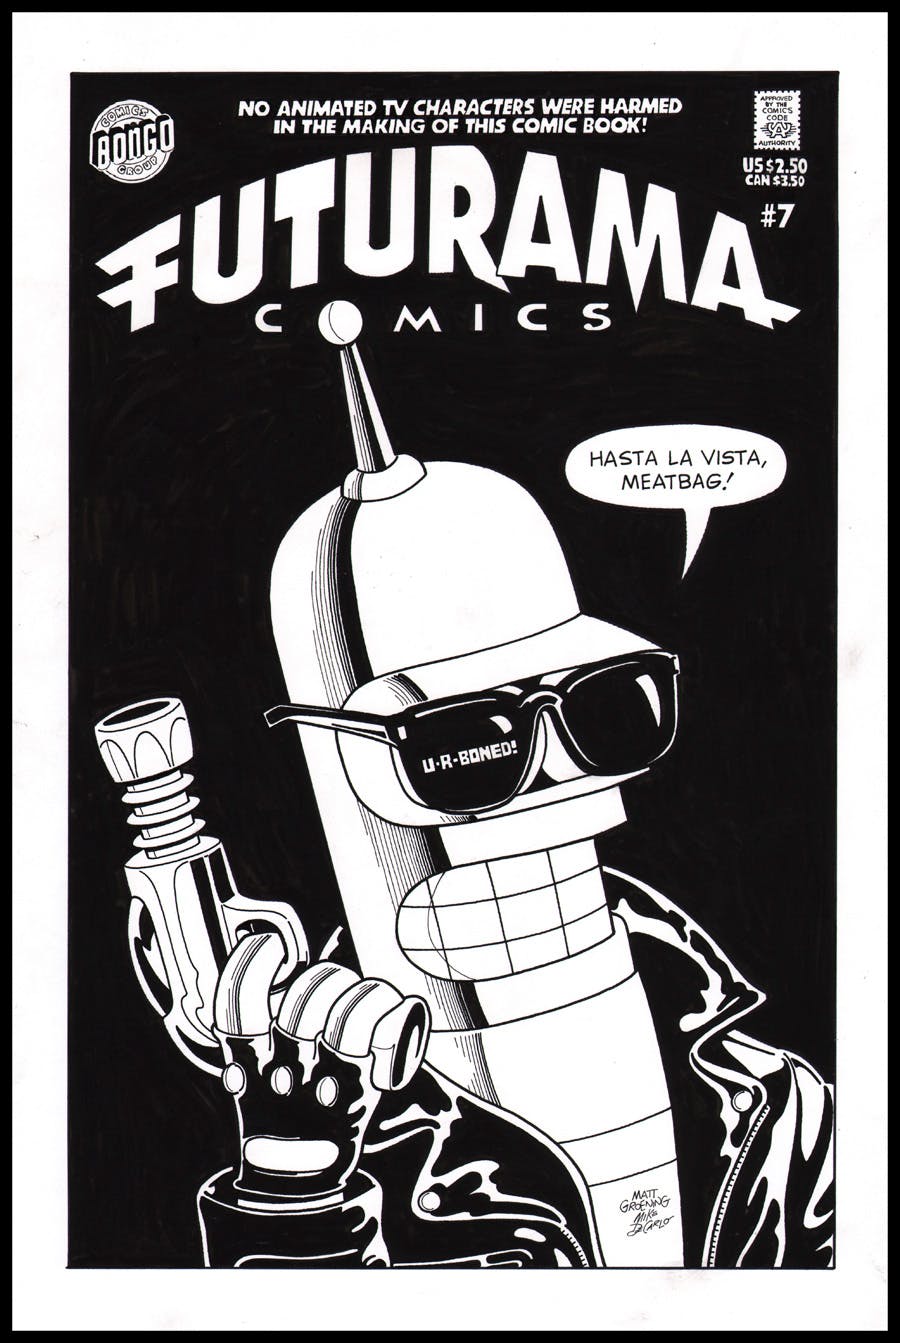 Futurama comics black and white cover